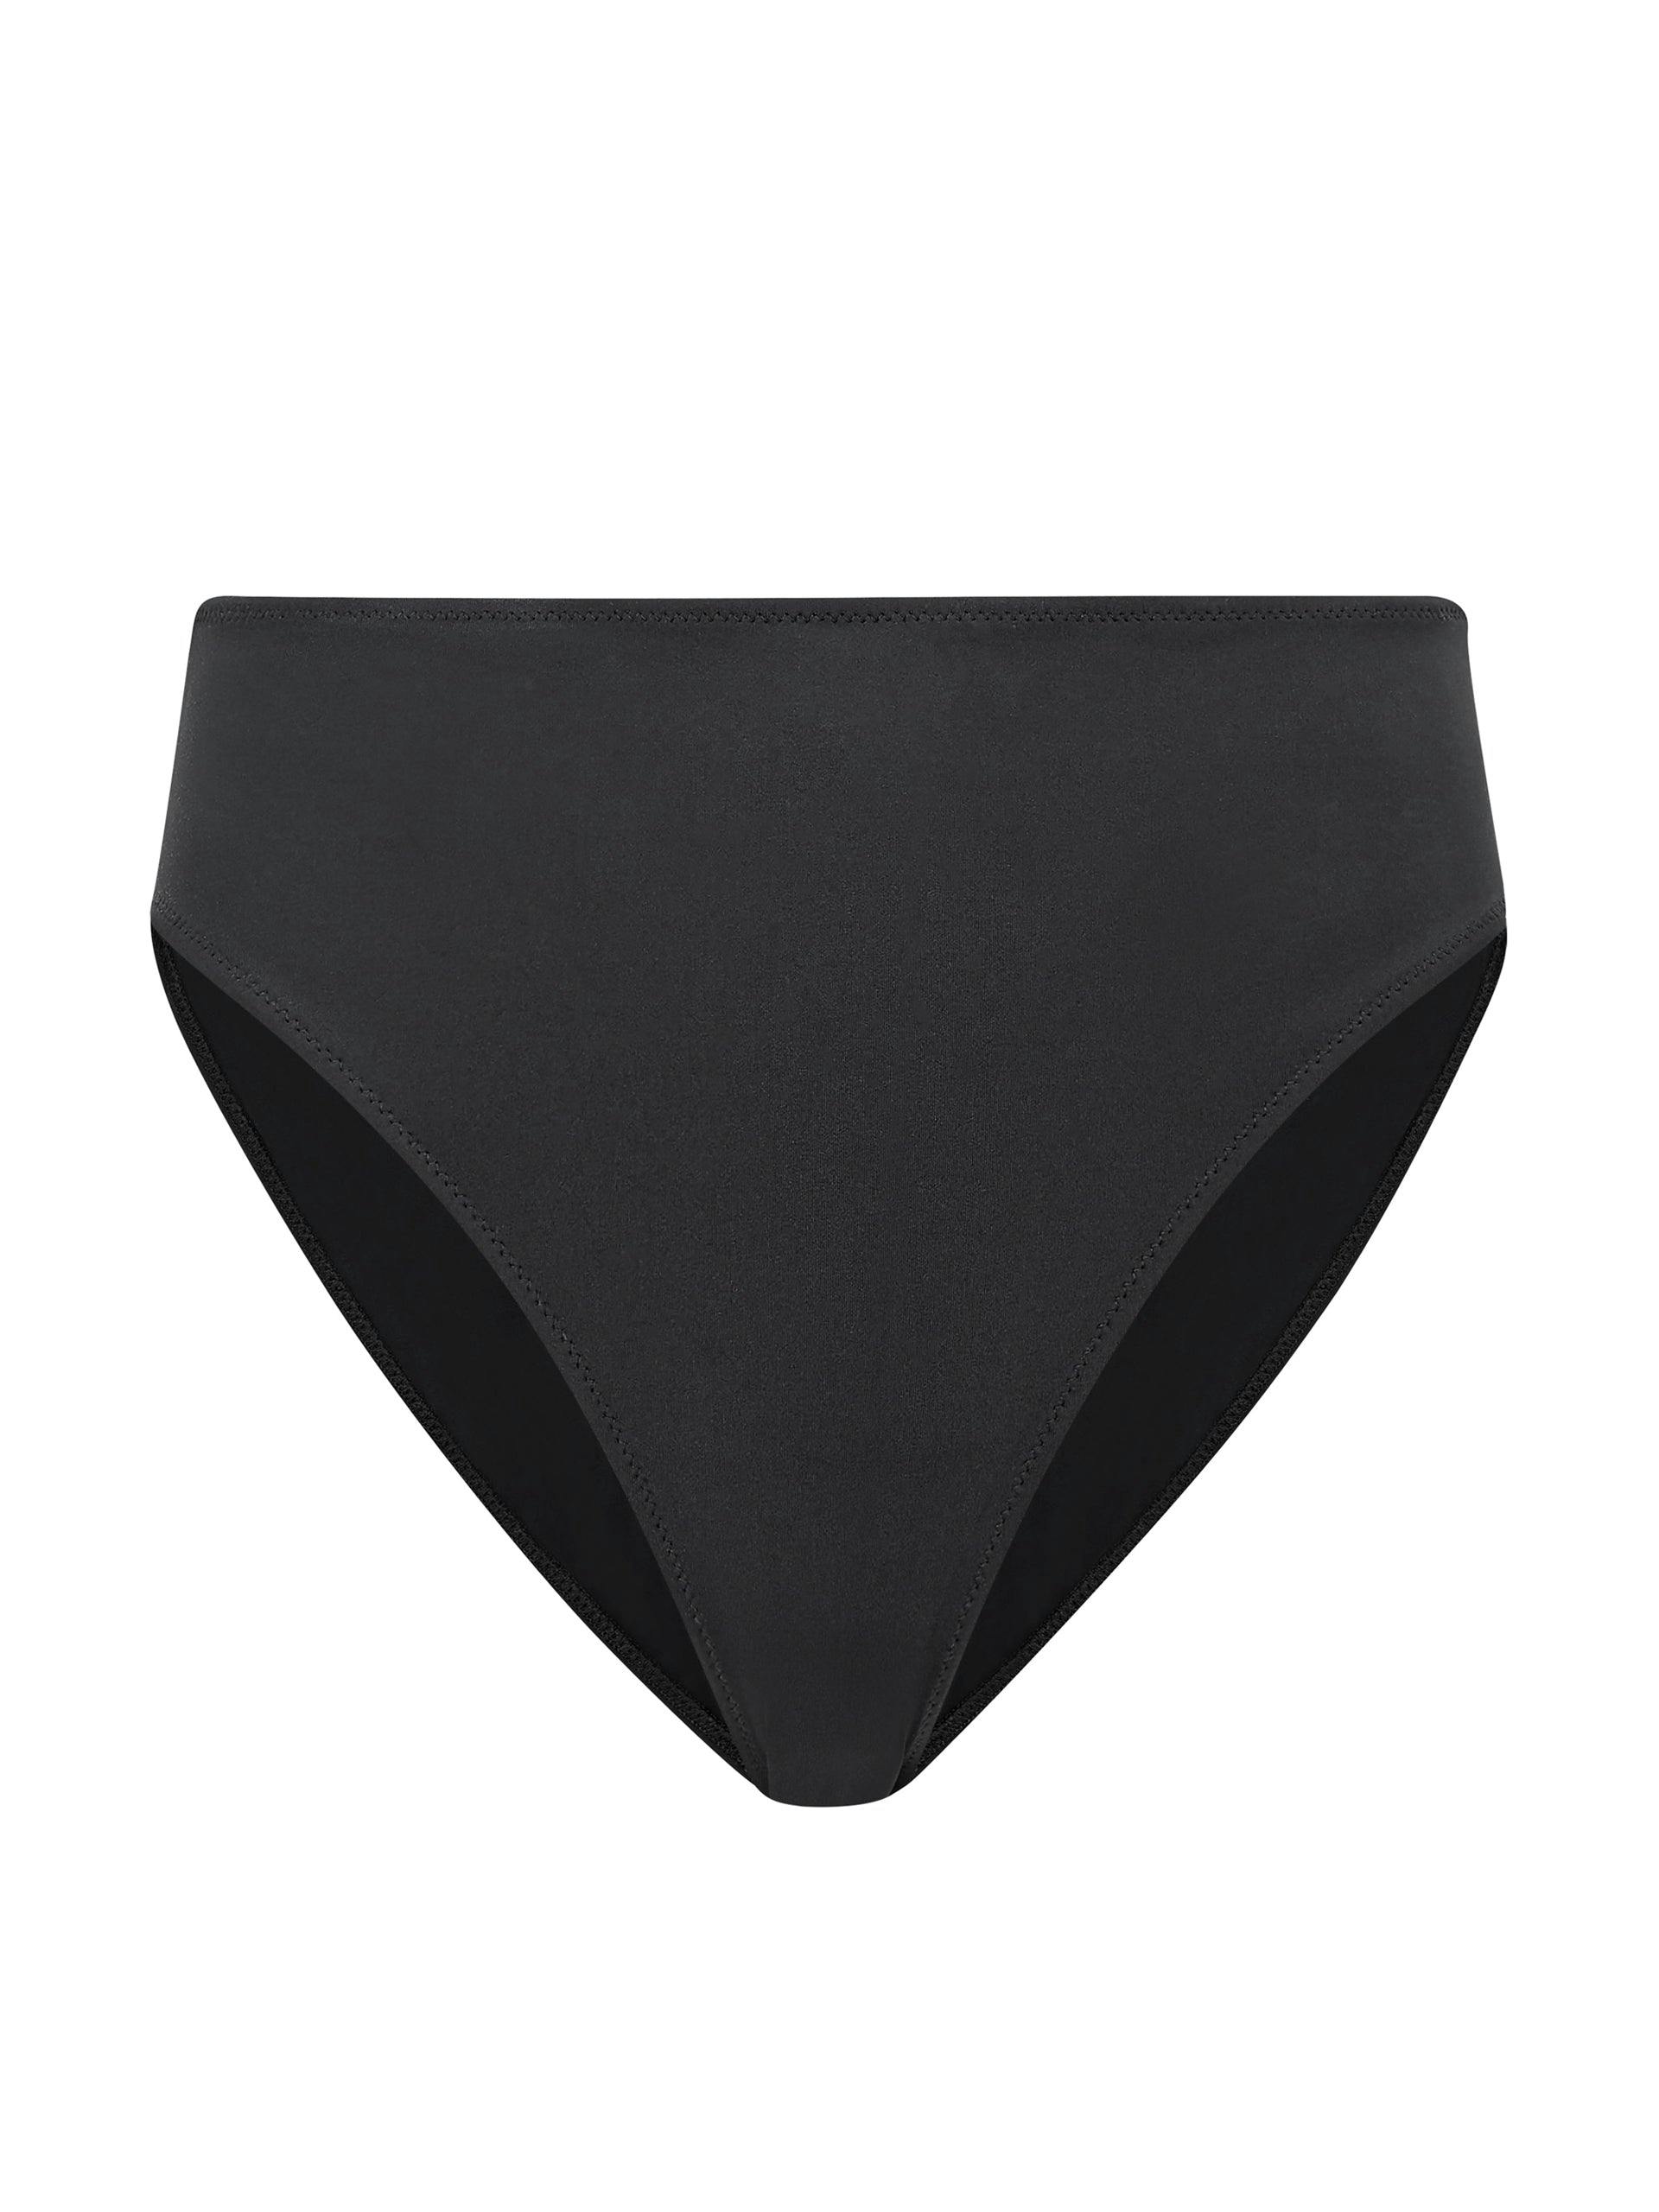 Black Iza bikini bottom